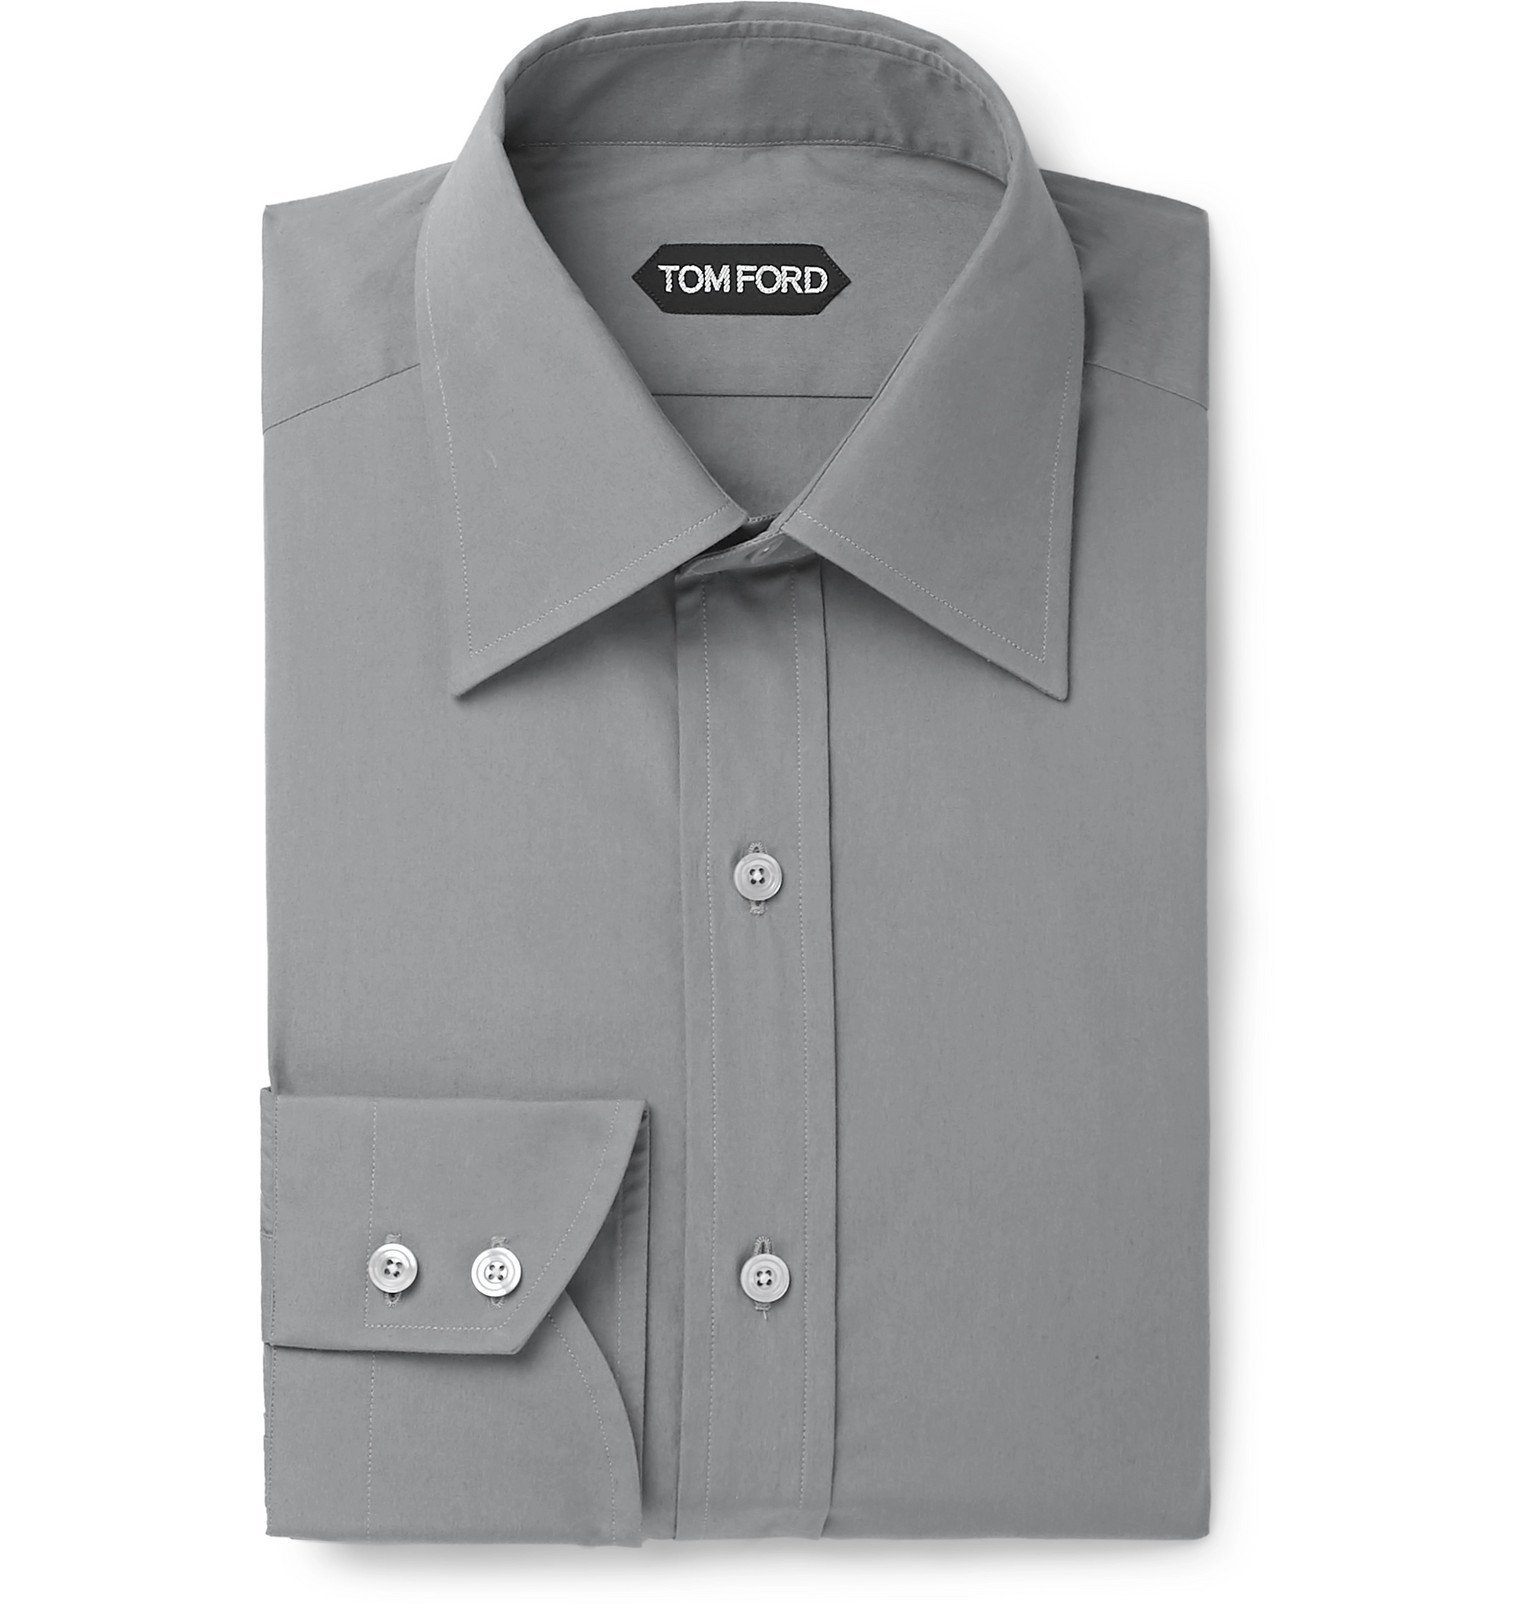 TOM FORD - Grey Slim-Fit Cotton-Poplin Shirt - Gray TOM FORD